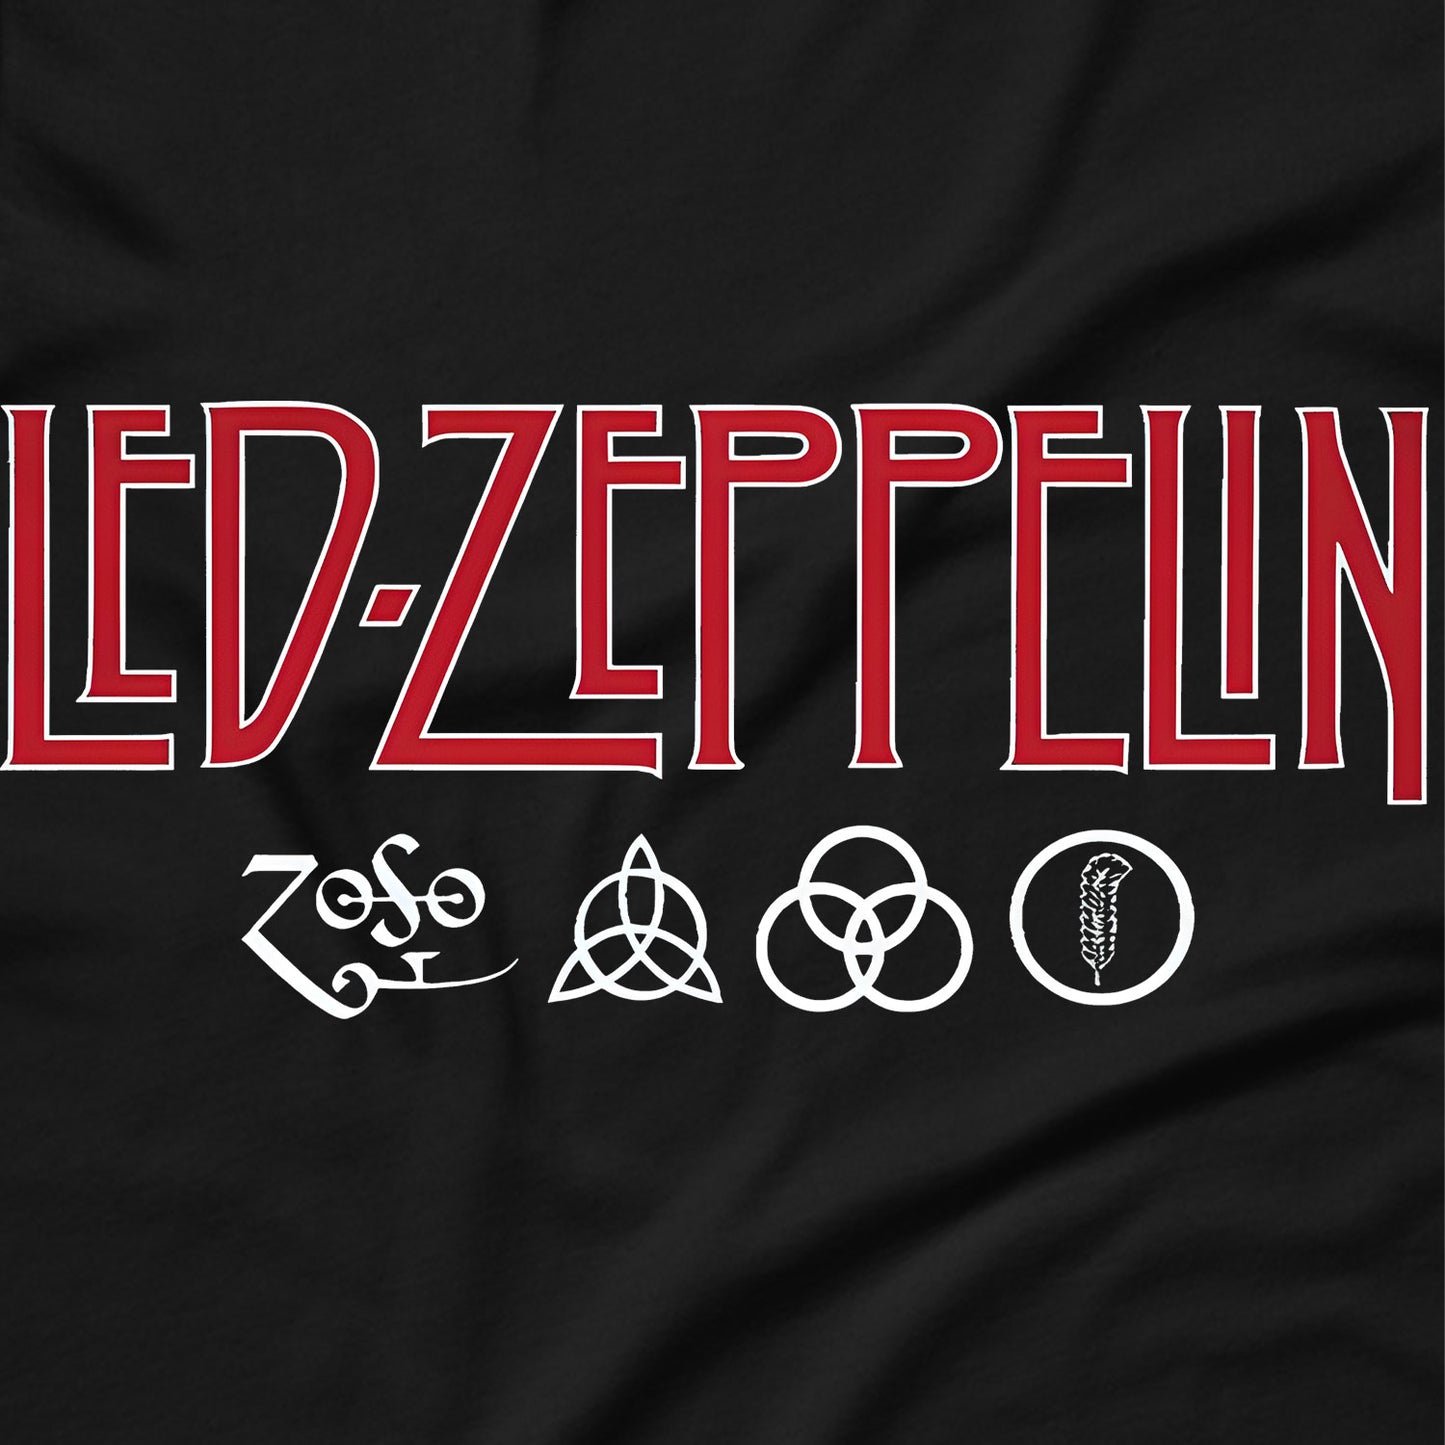 Led Zepplin - Logo and Symbols T-Shirt